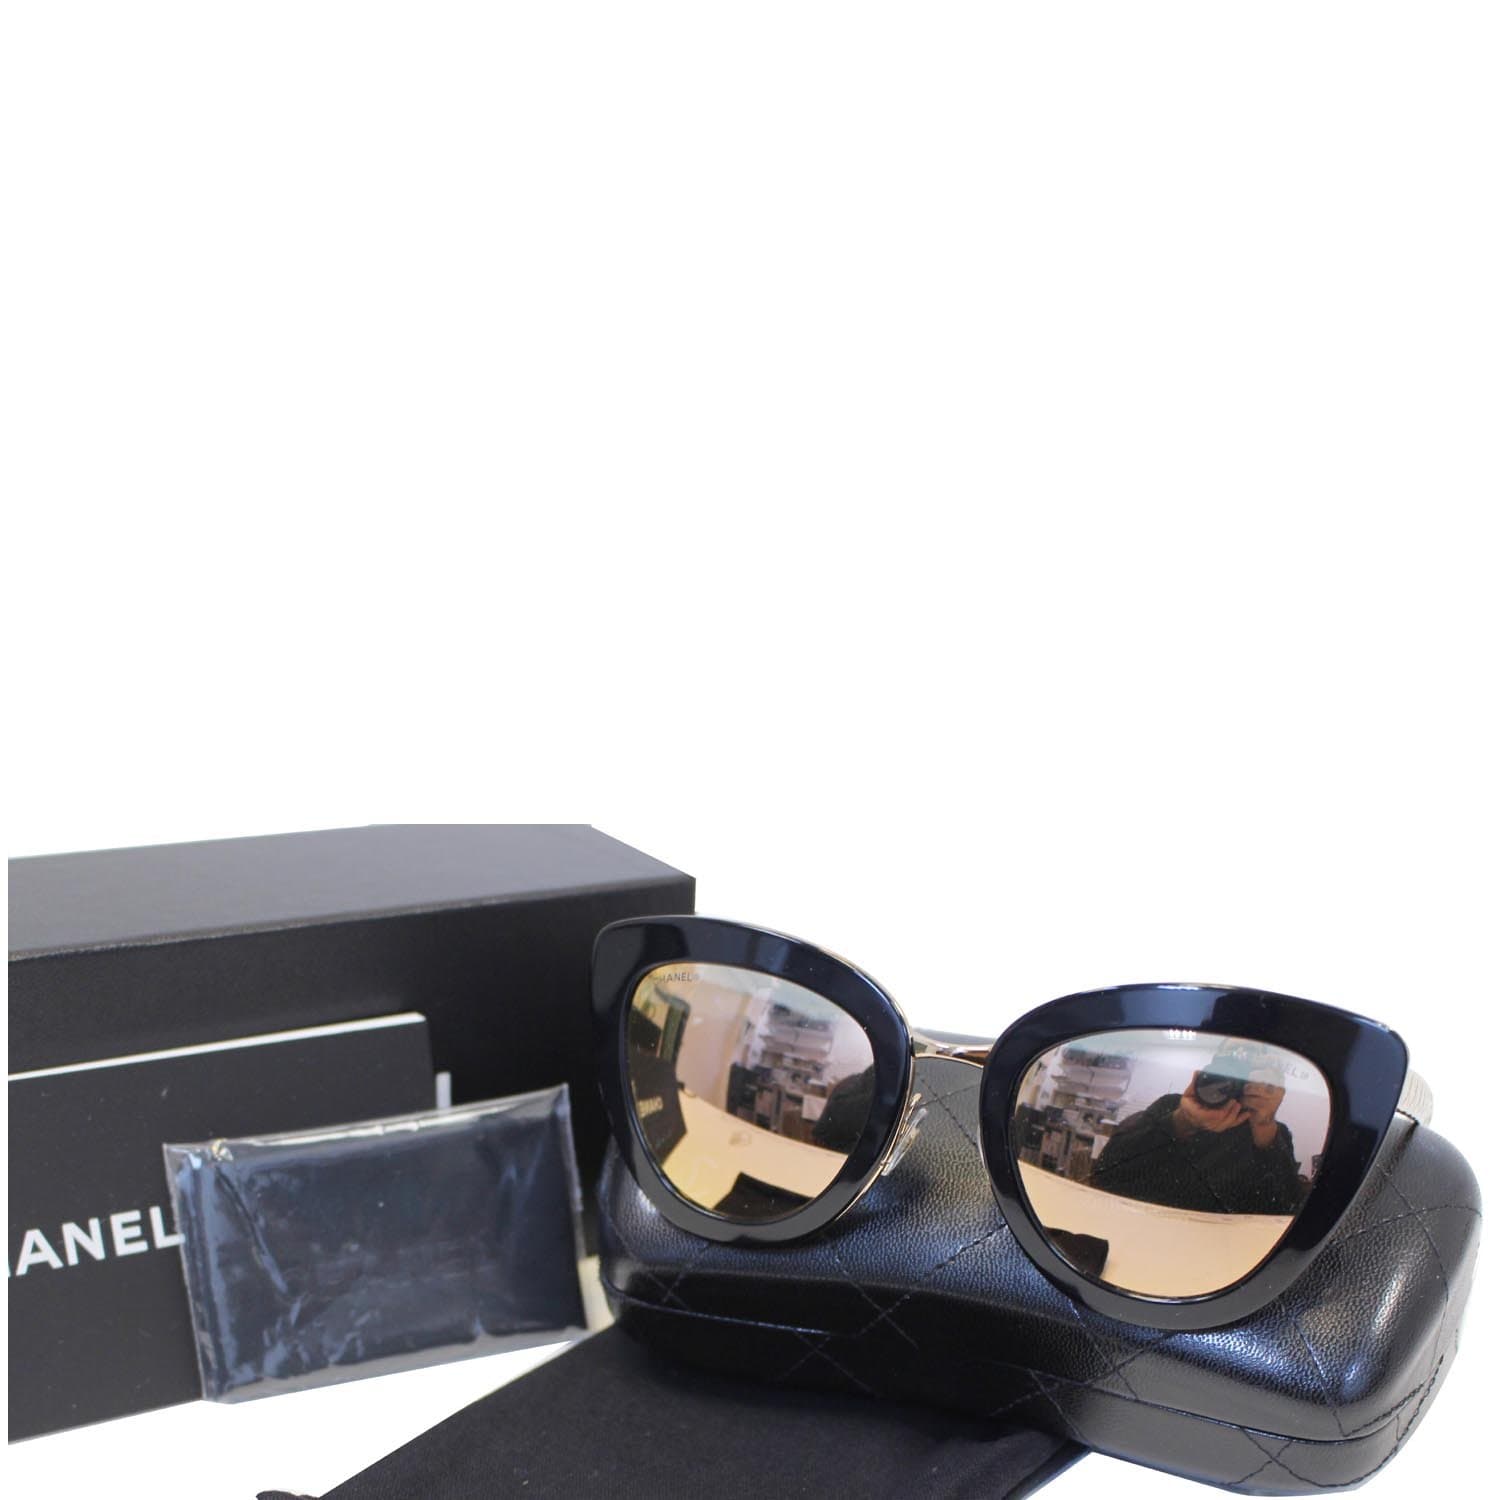 Chanel Black Interlocking CC Logo Cat-Eye Sunglasses